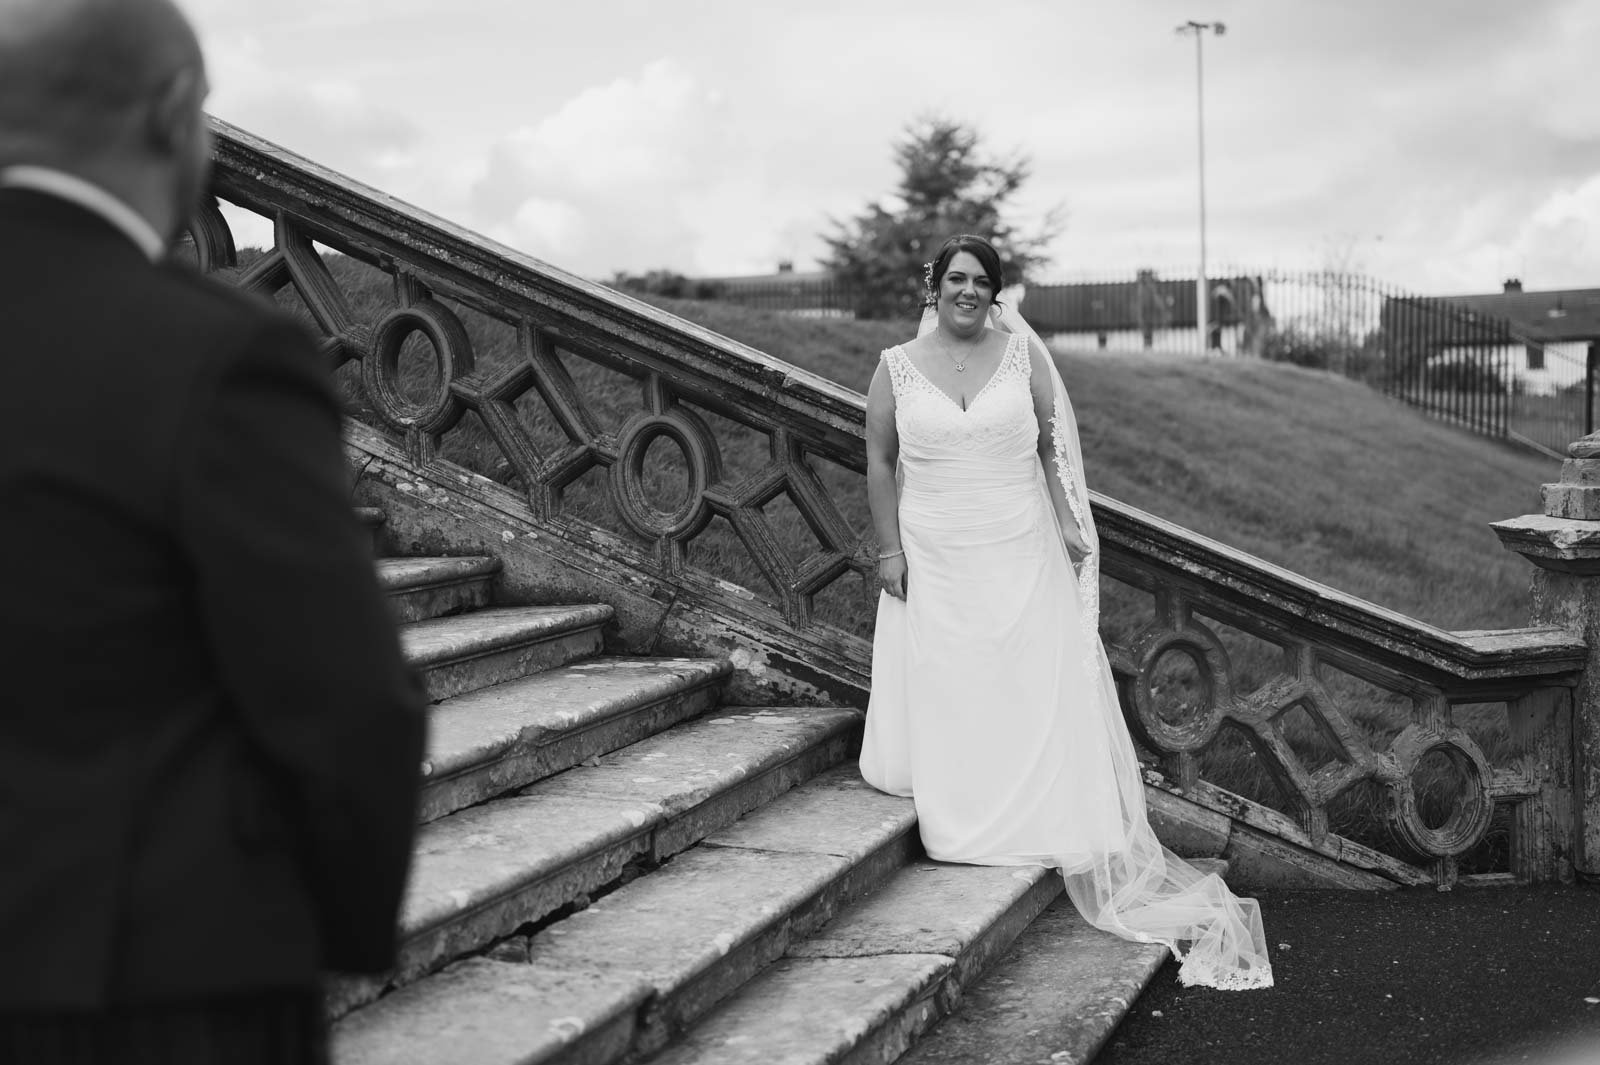  portrait of bride on steps 